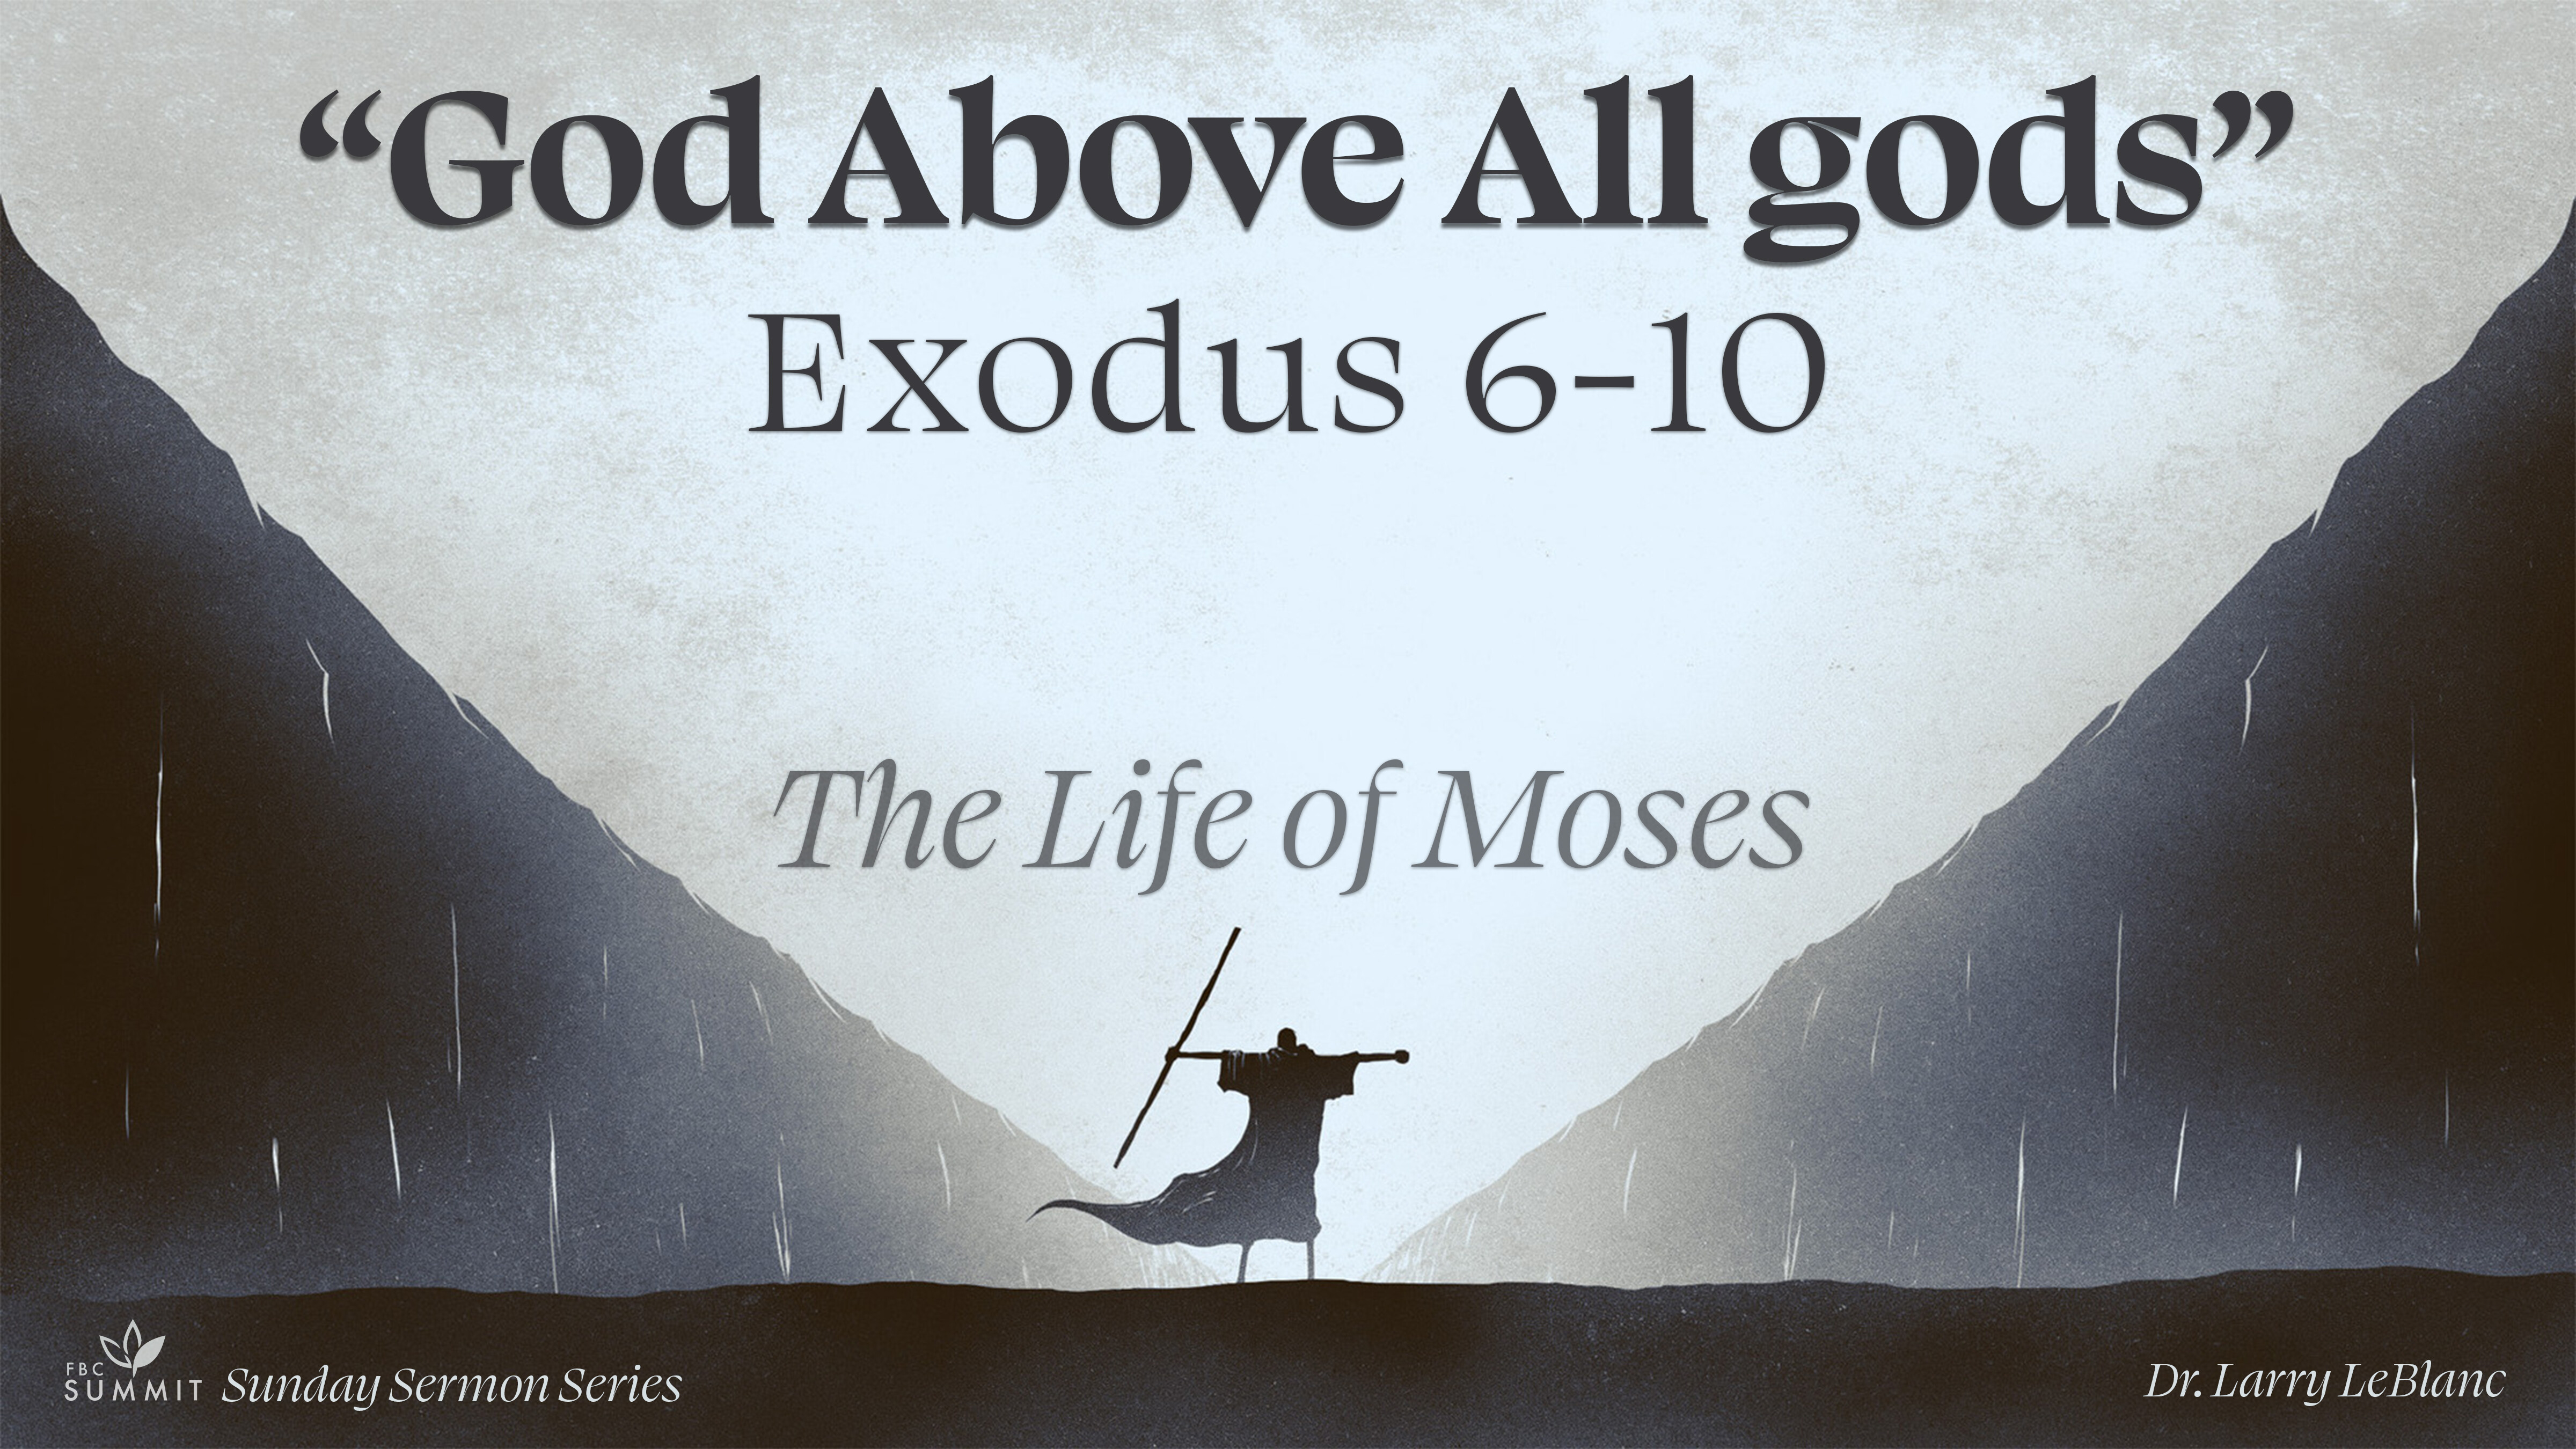 "God Above All Gods" Exodus 6-10 // Dr. Larry Leblanc